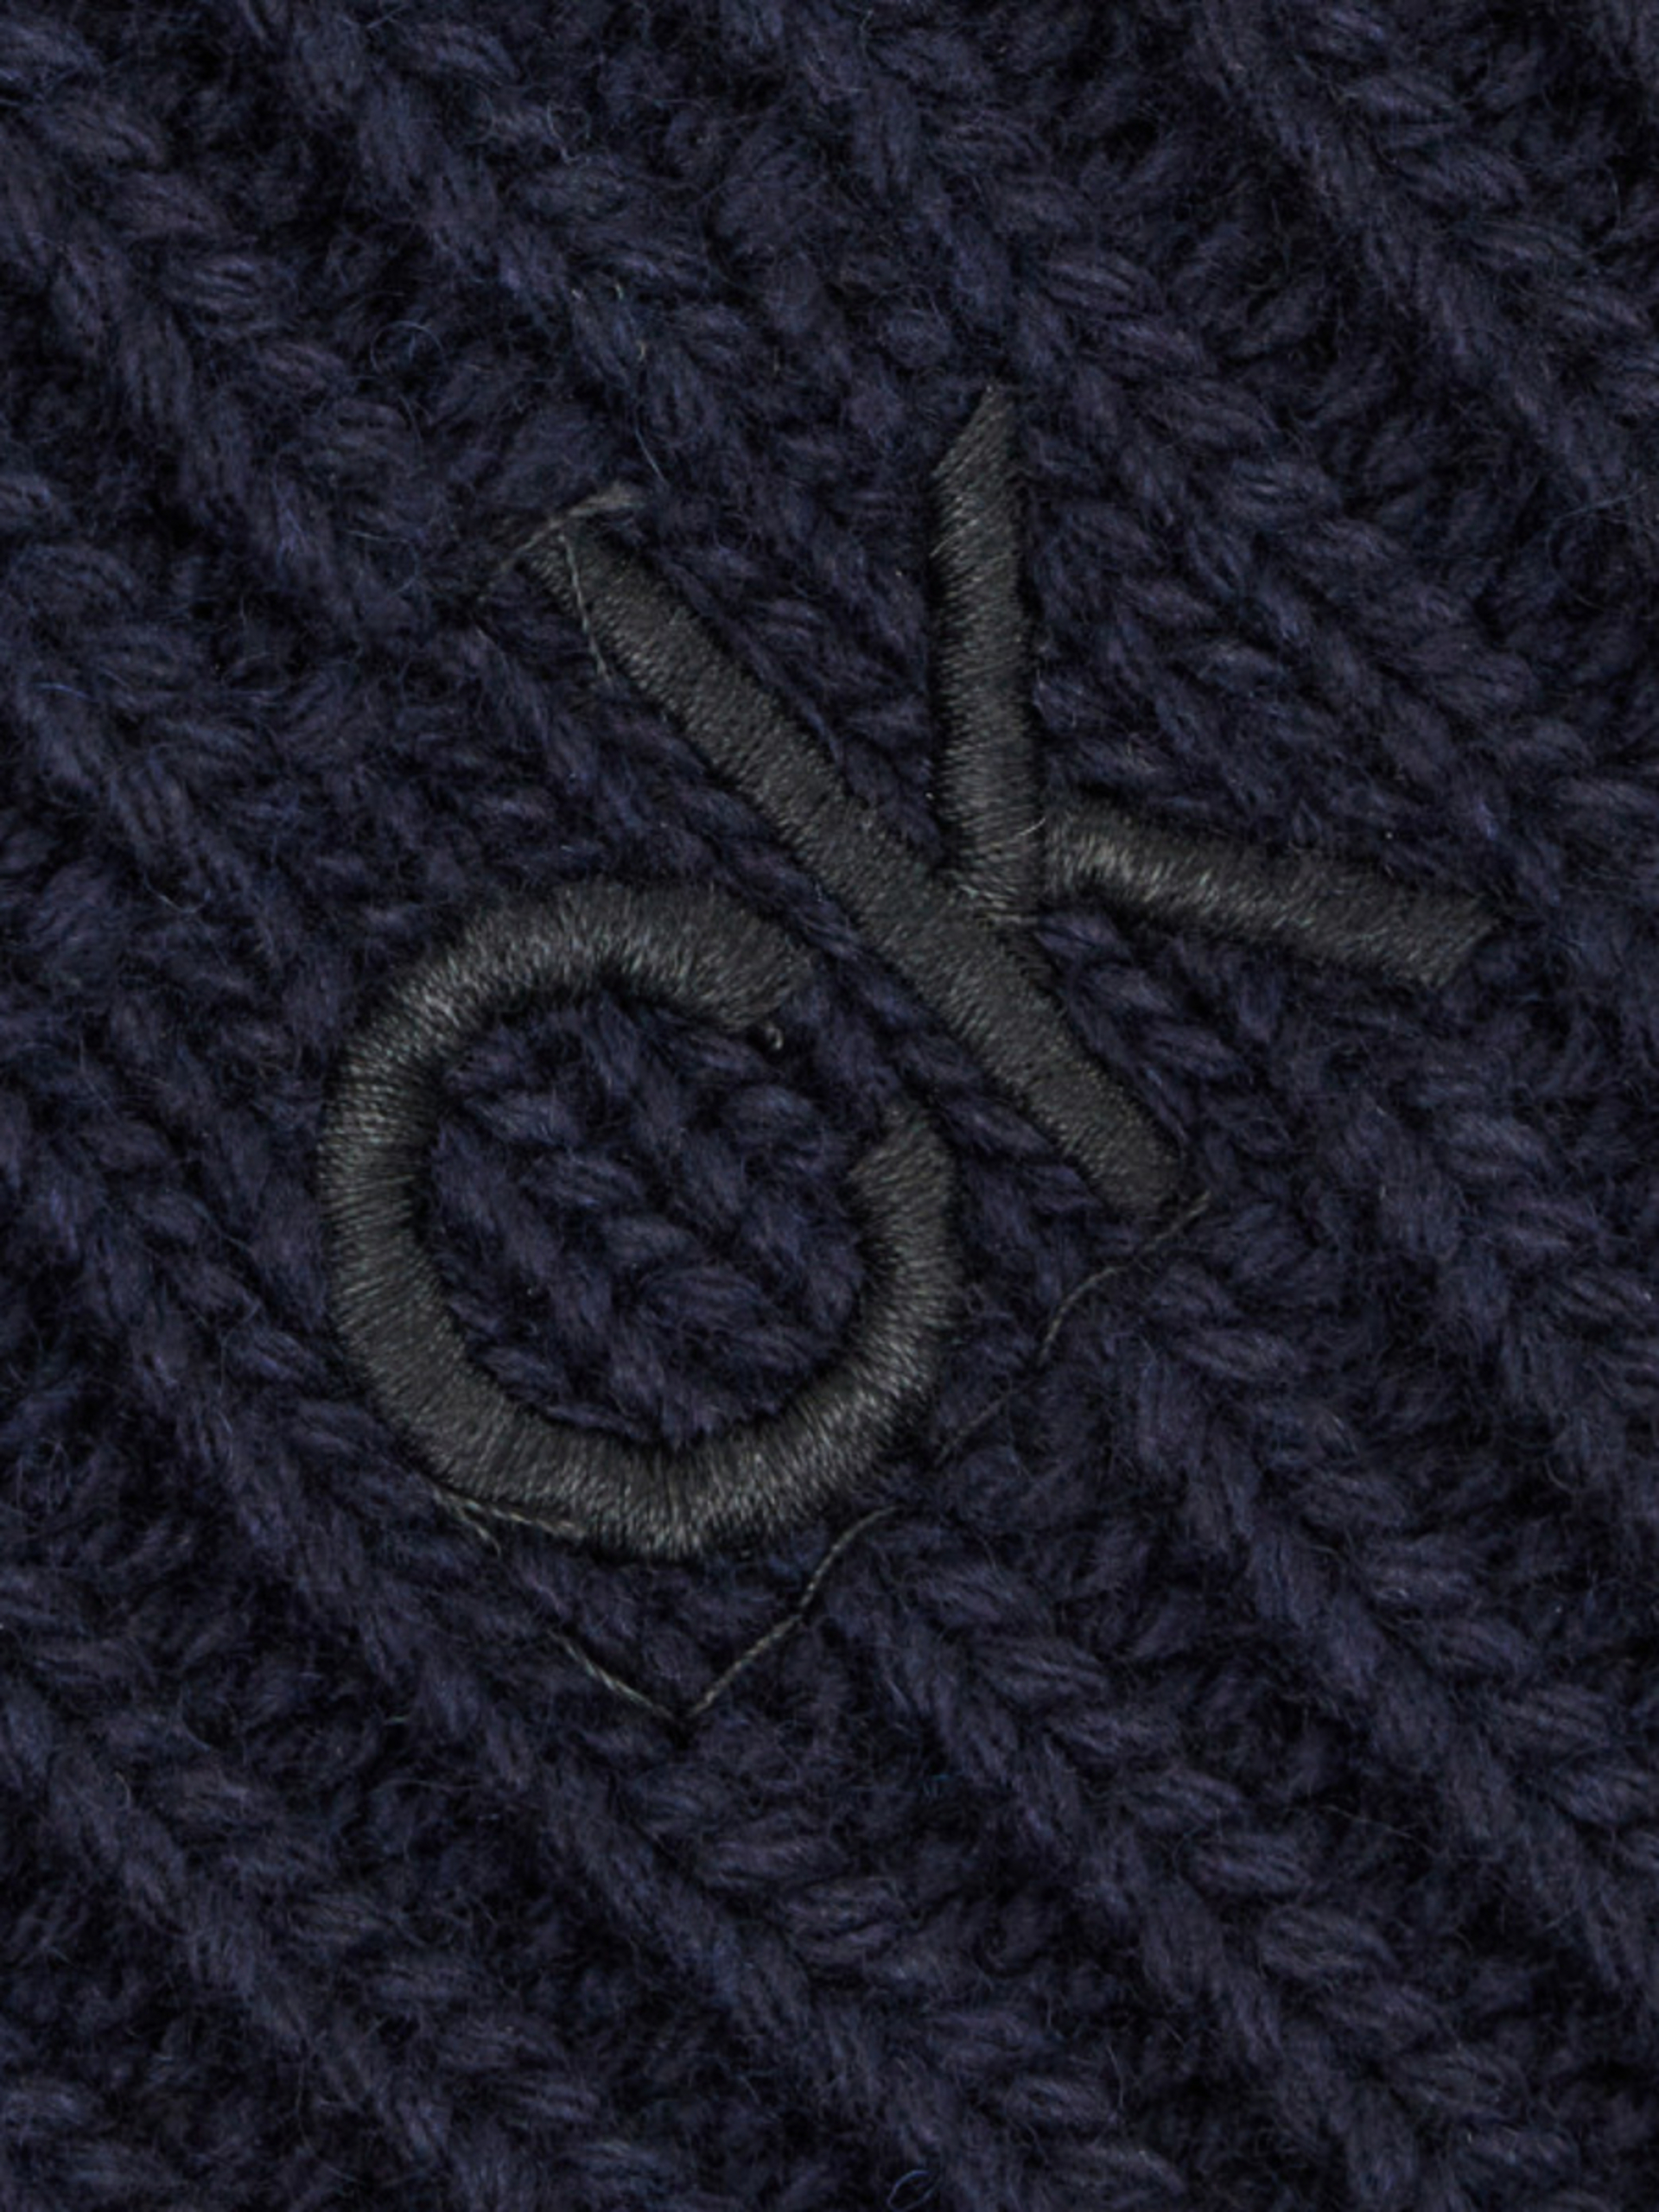 Calvin Klein pánská tmavě modrá čepice - OS (CEF)